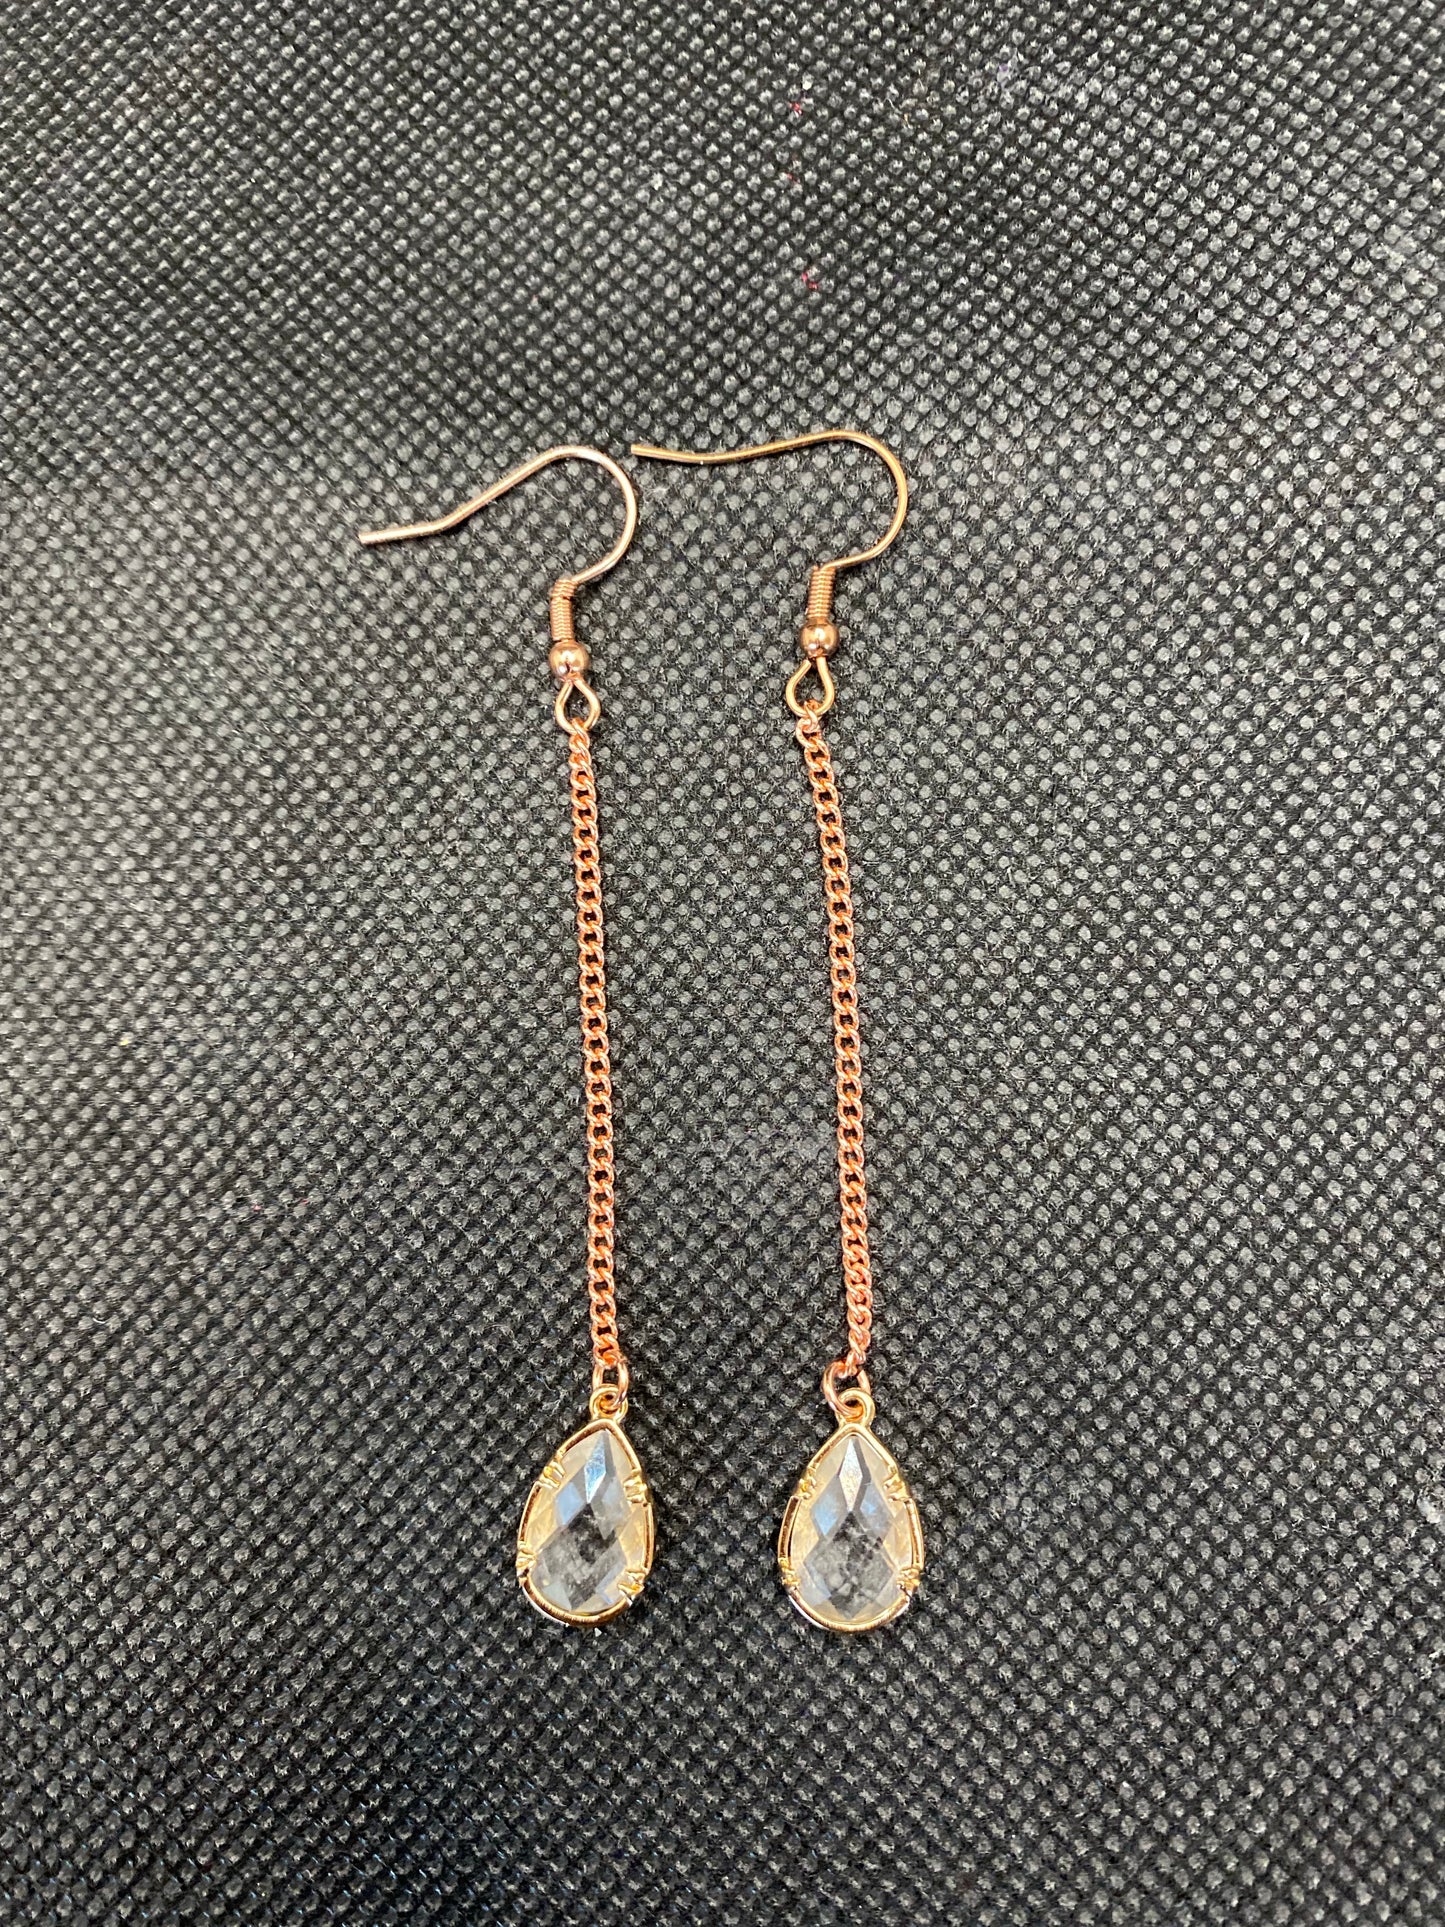 Diamond drop earrings - April birthstone